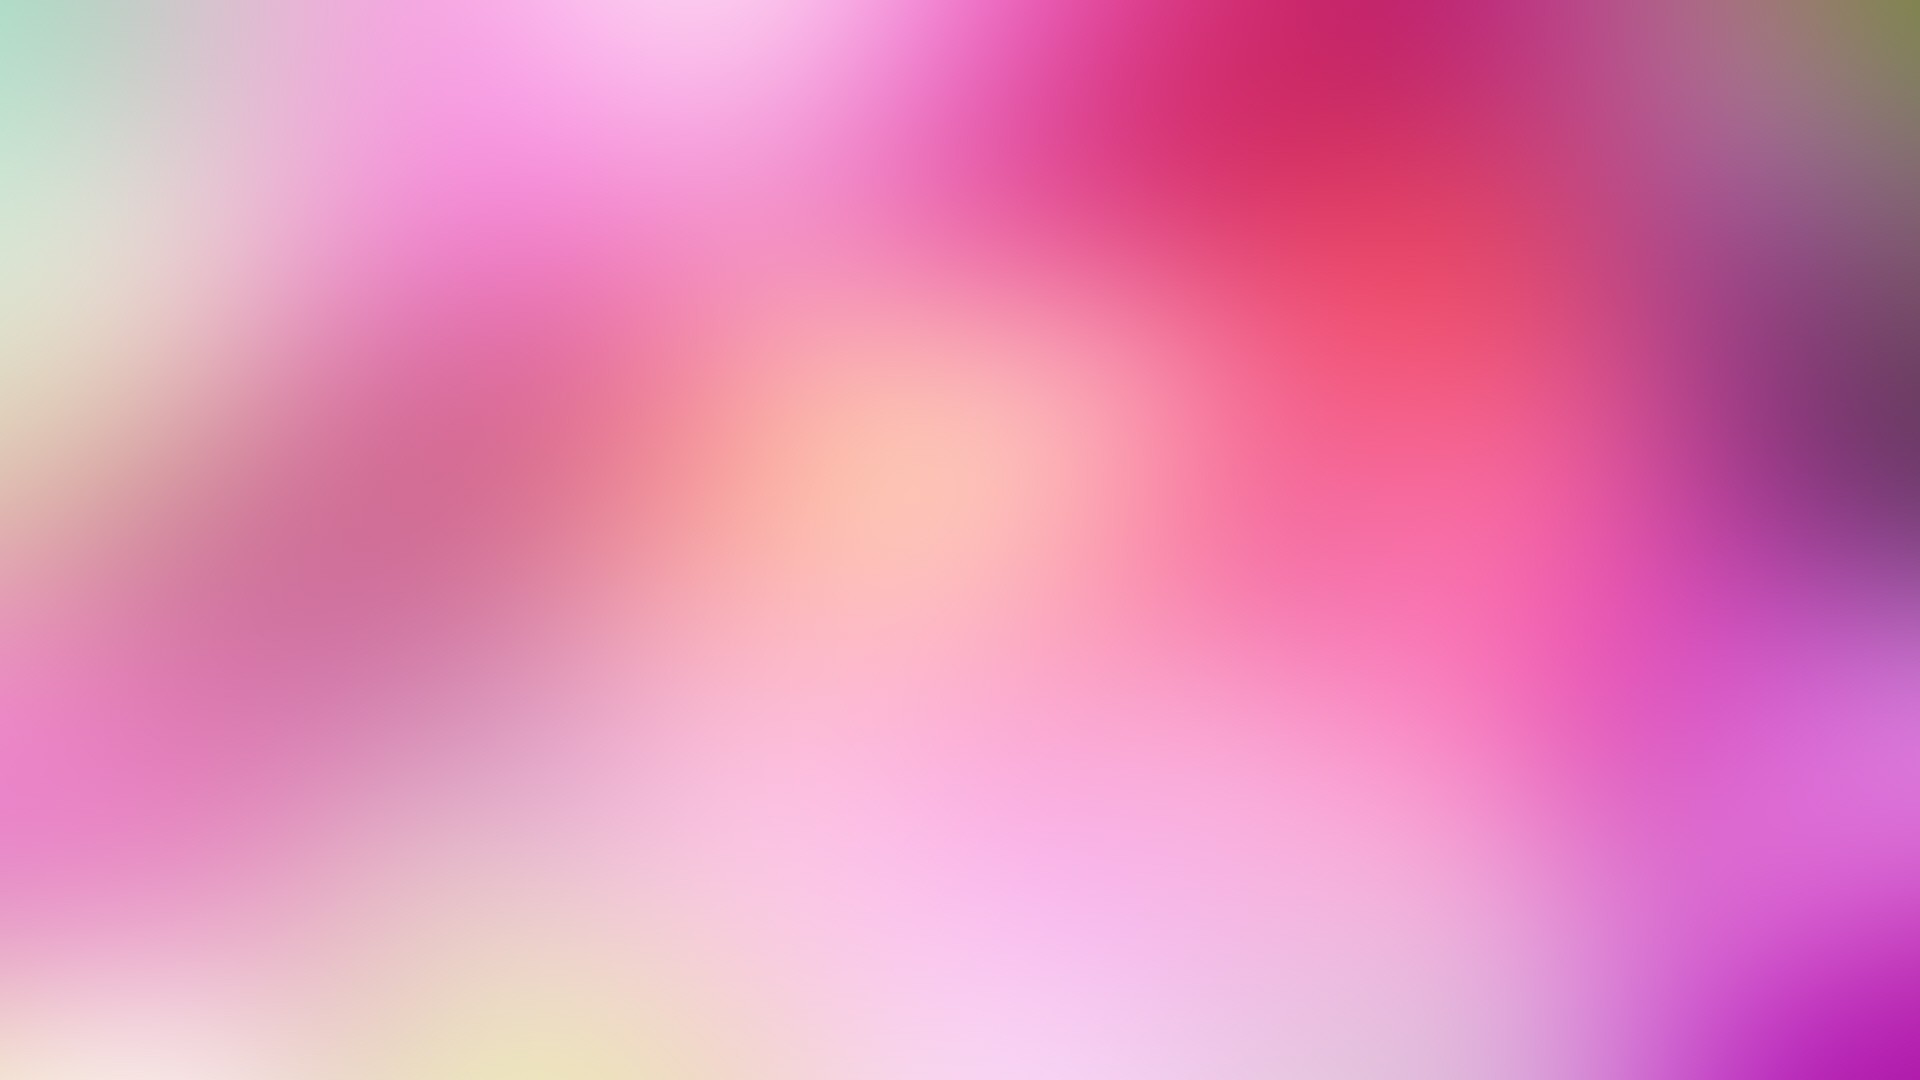 Aesthetic Pink Wallpapers HD Free download  PixelsTalkNet